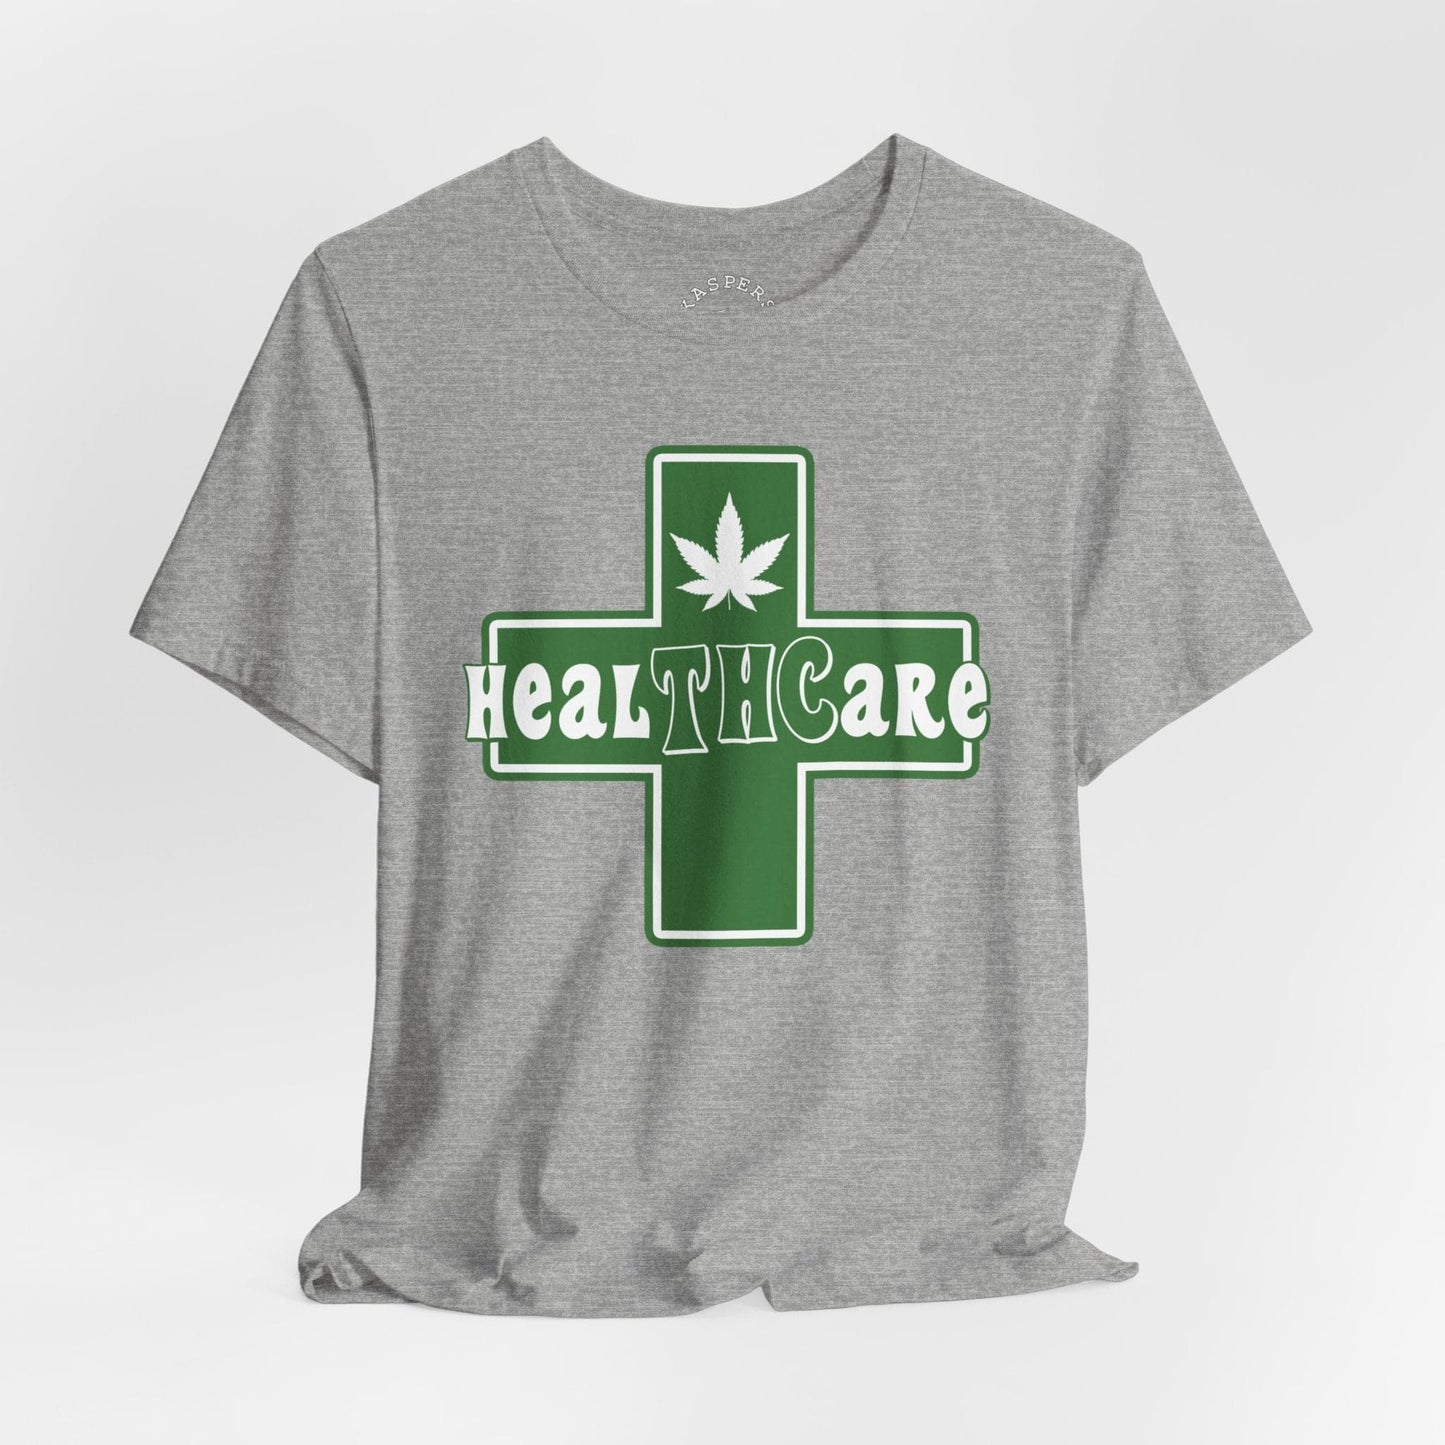 HealTHCare T-Shirt